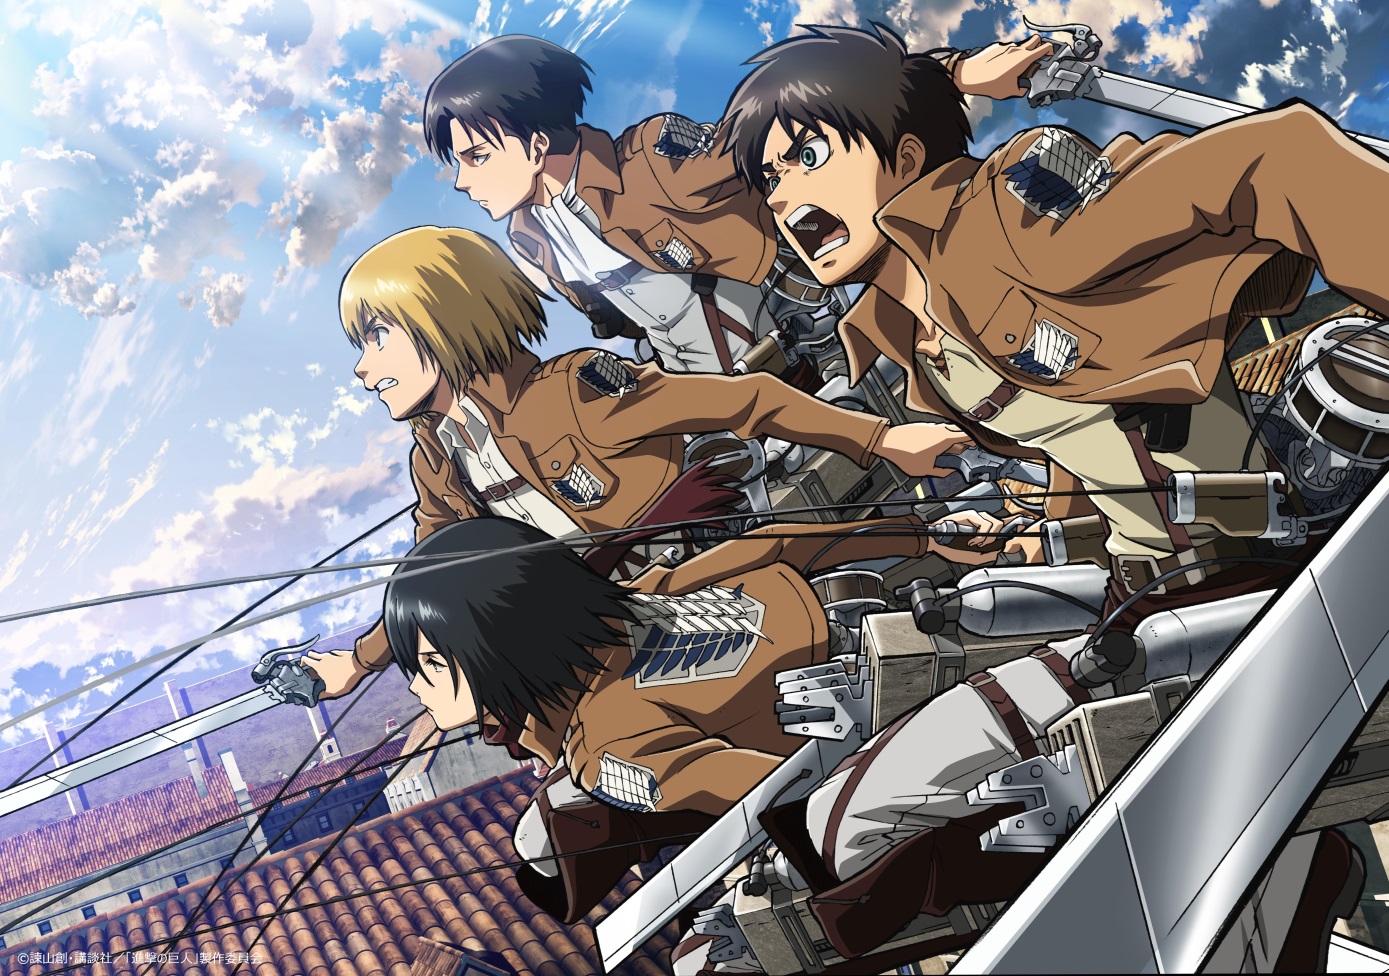 Toonami Orders 'FLCL' Anime Sequel